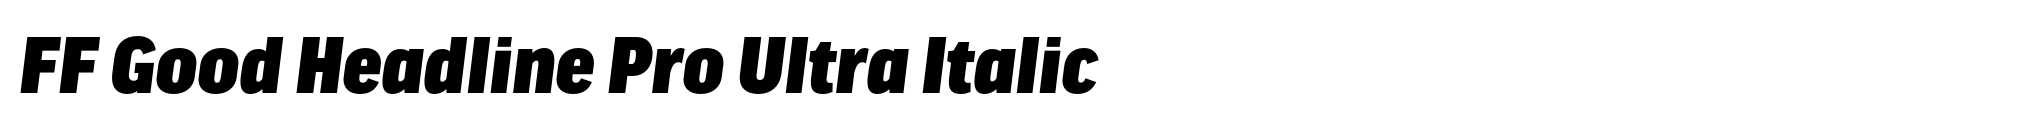 FF Good Headline Pro Ultra Italic image